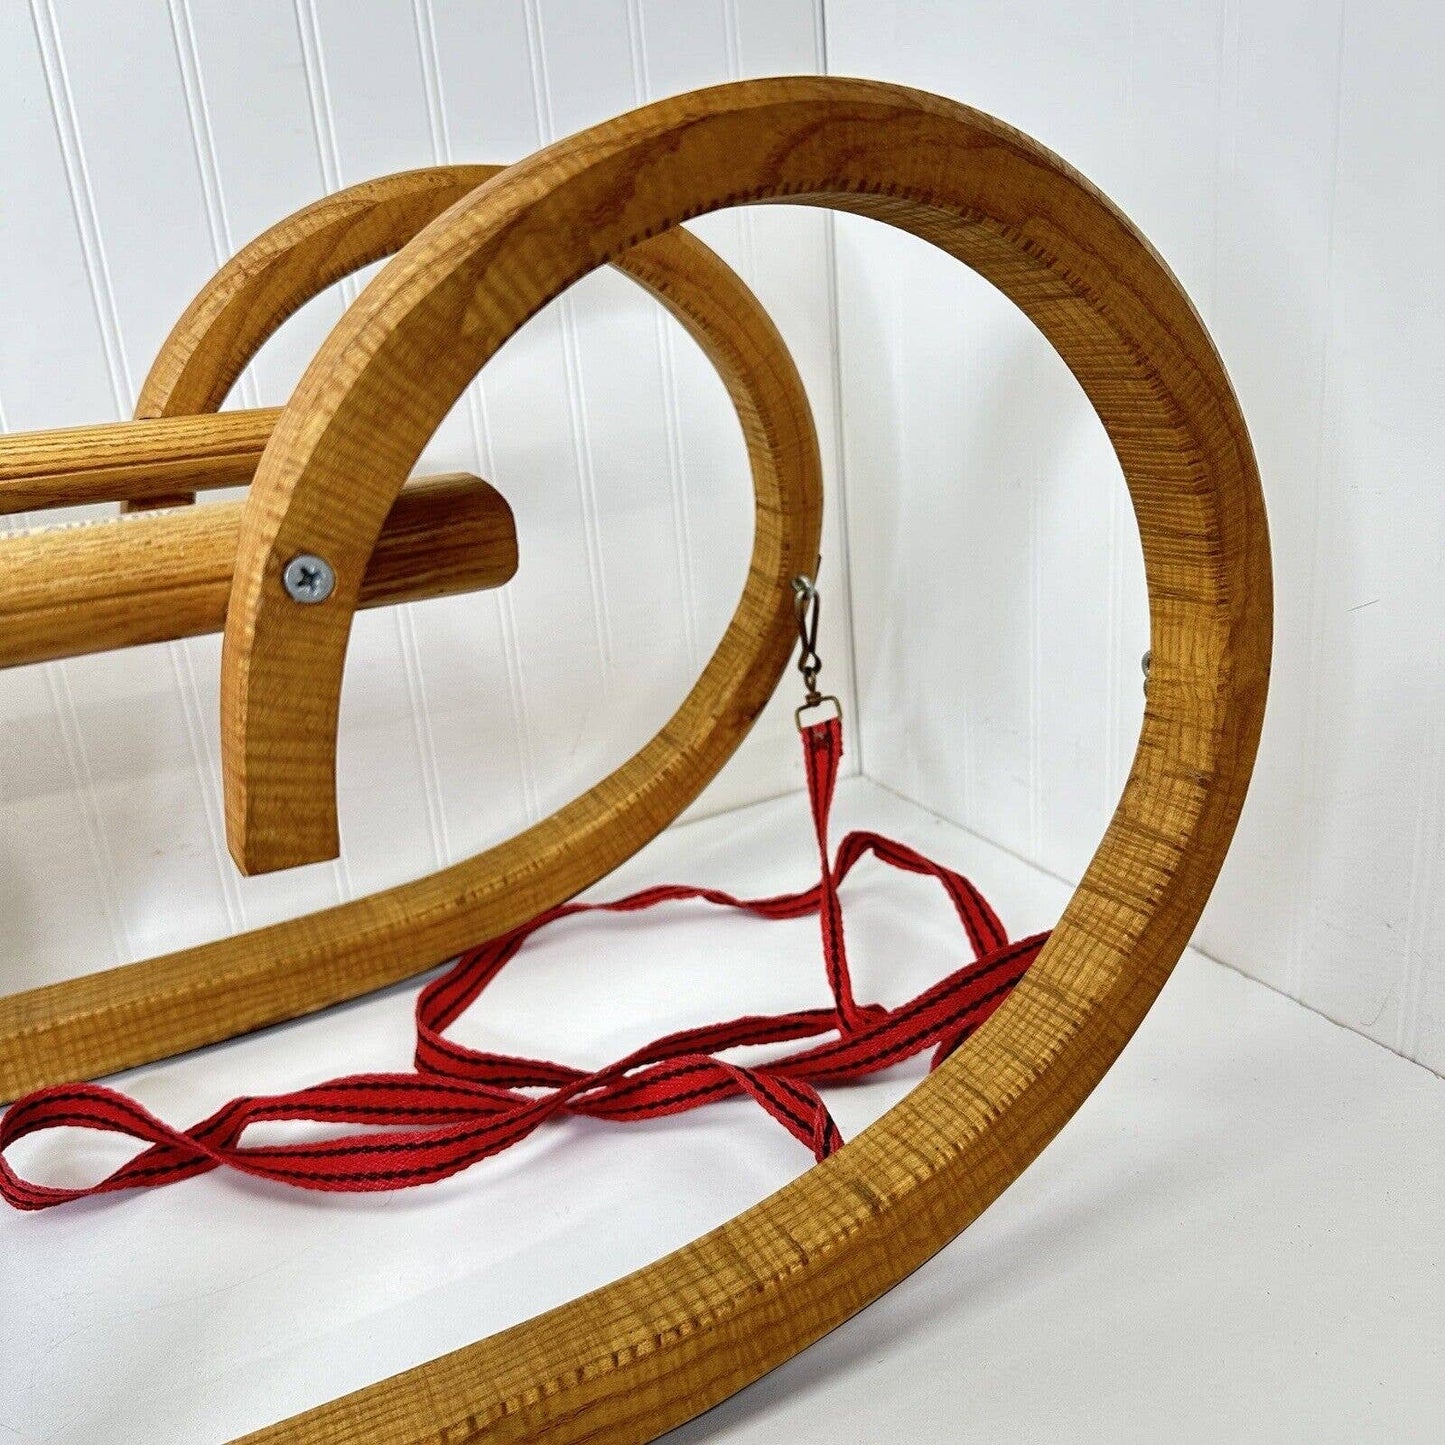 Vintage RIJO Rodel 39” Oak Wood Curly Horned Sledge, Toboggan - Made In Austria